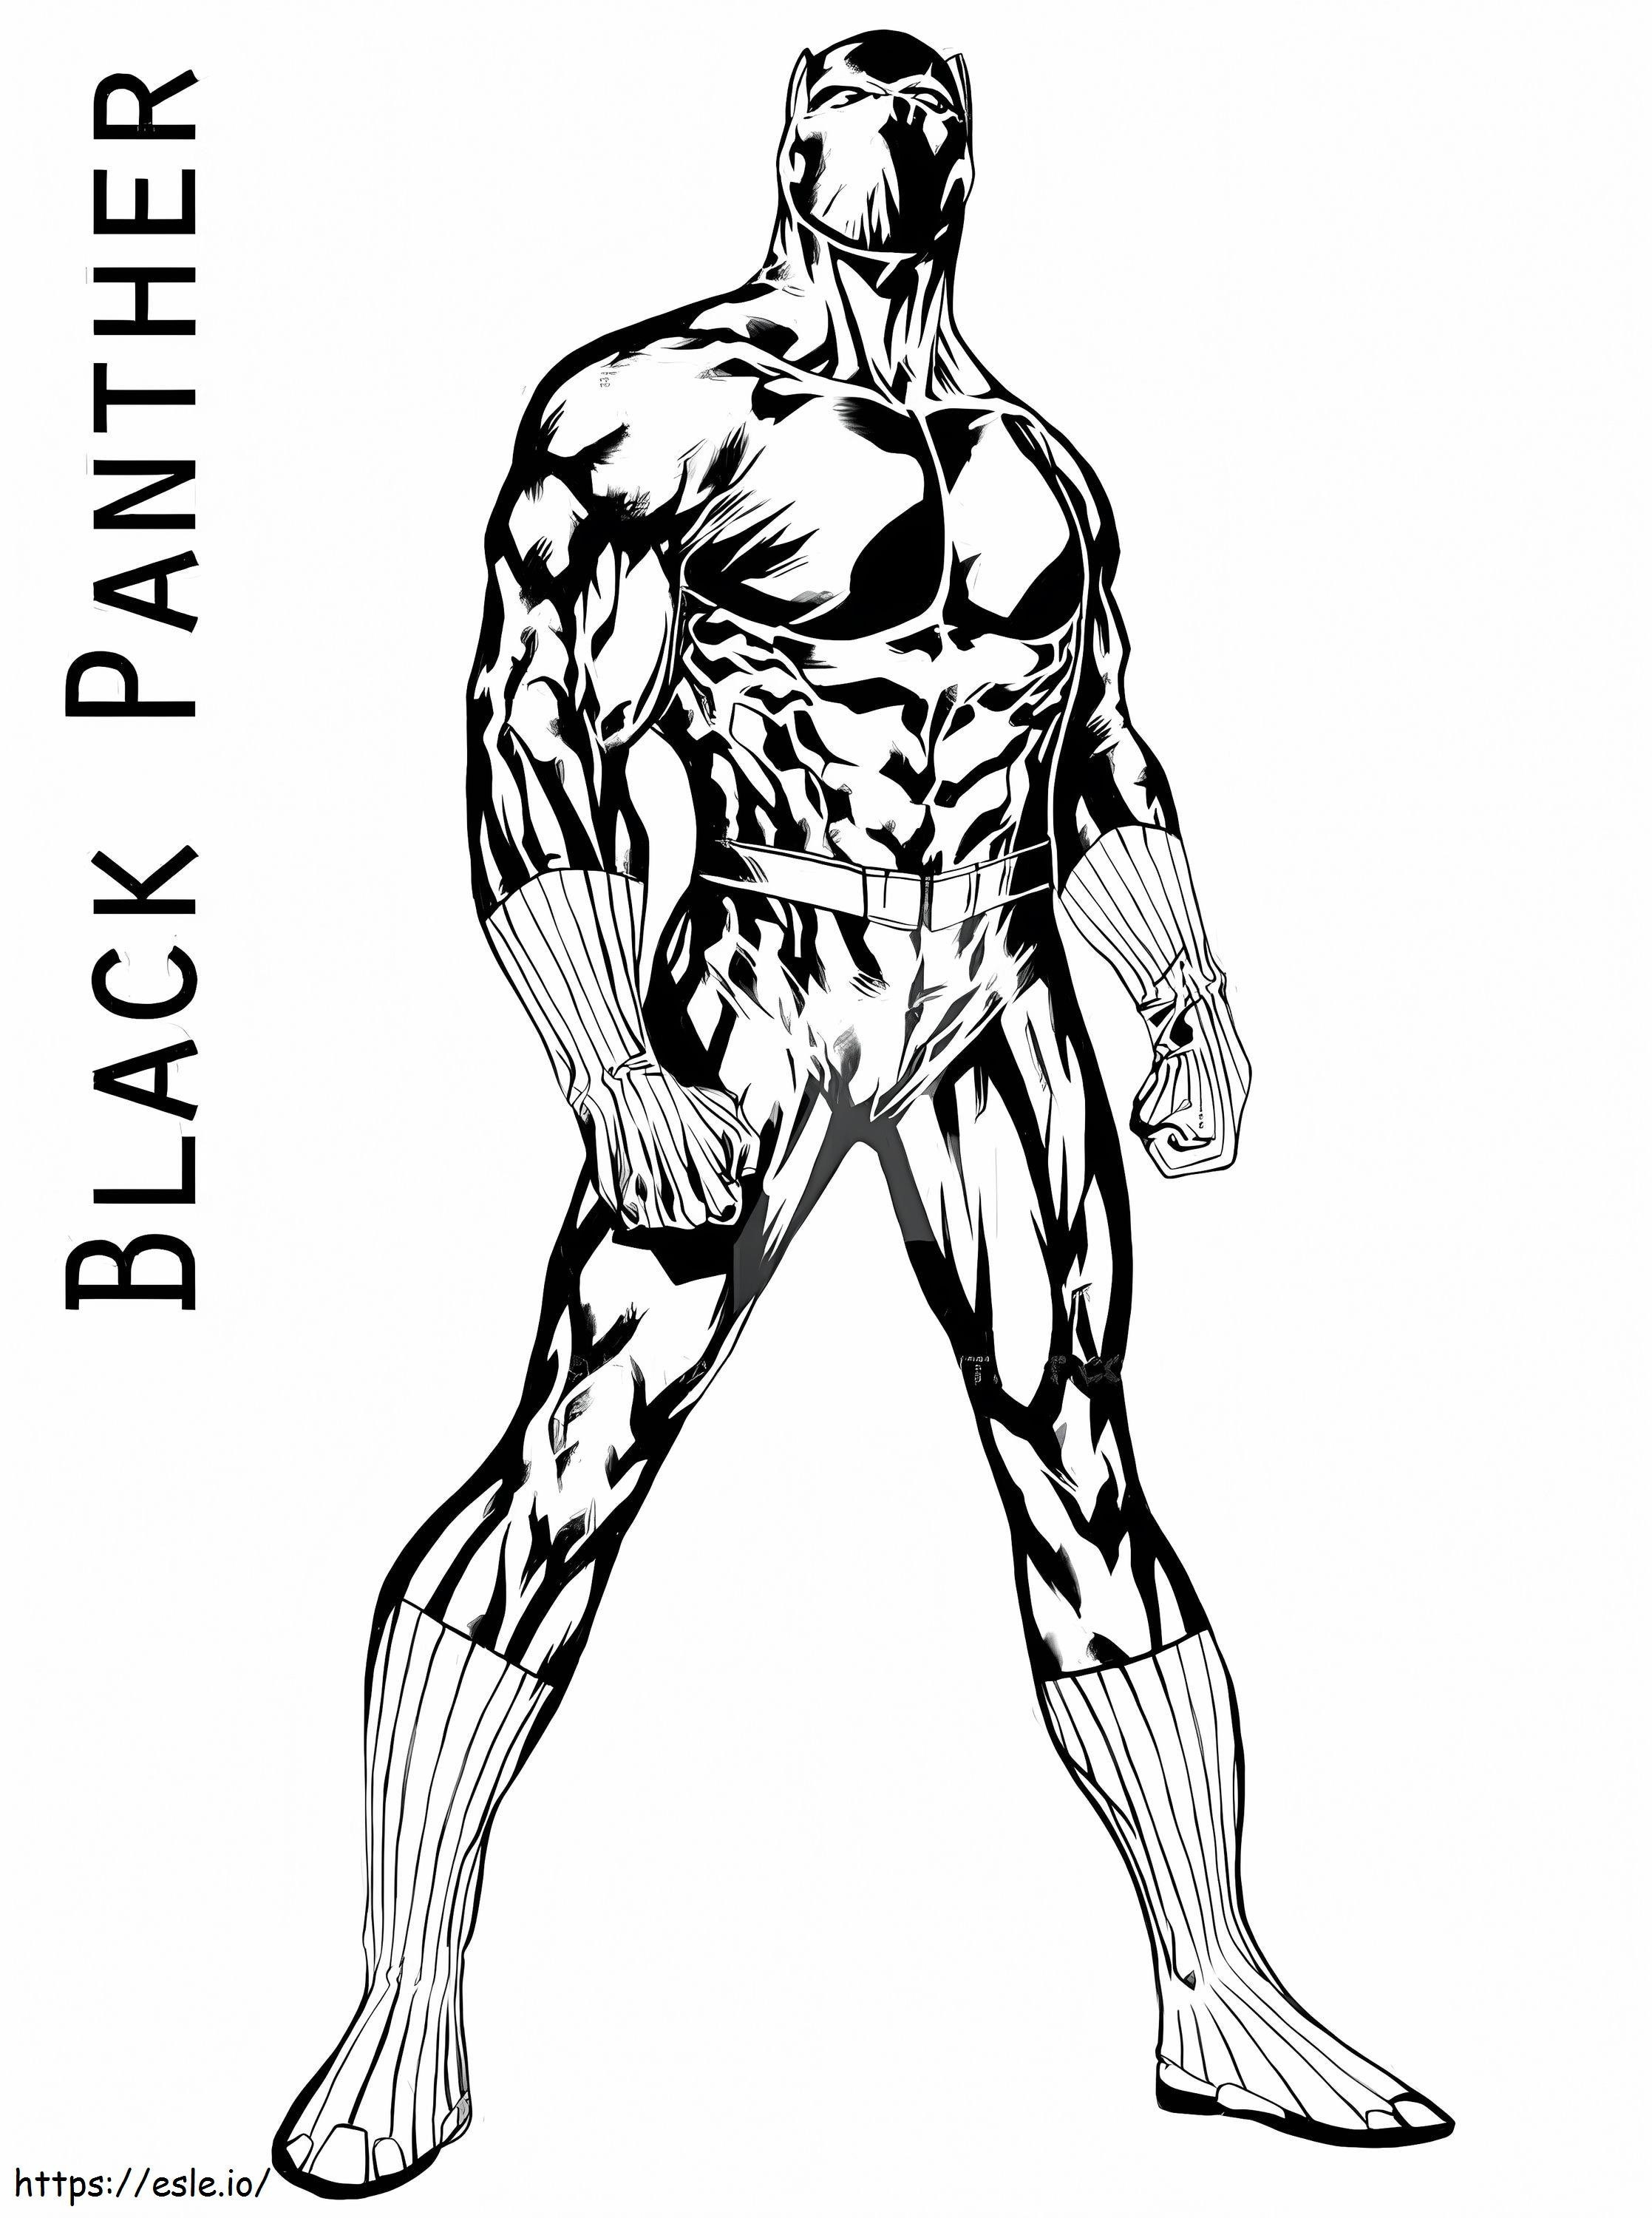 Excelente Pantera Negra para colorir